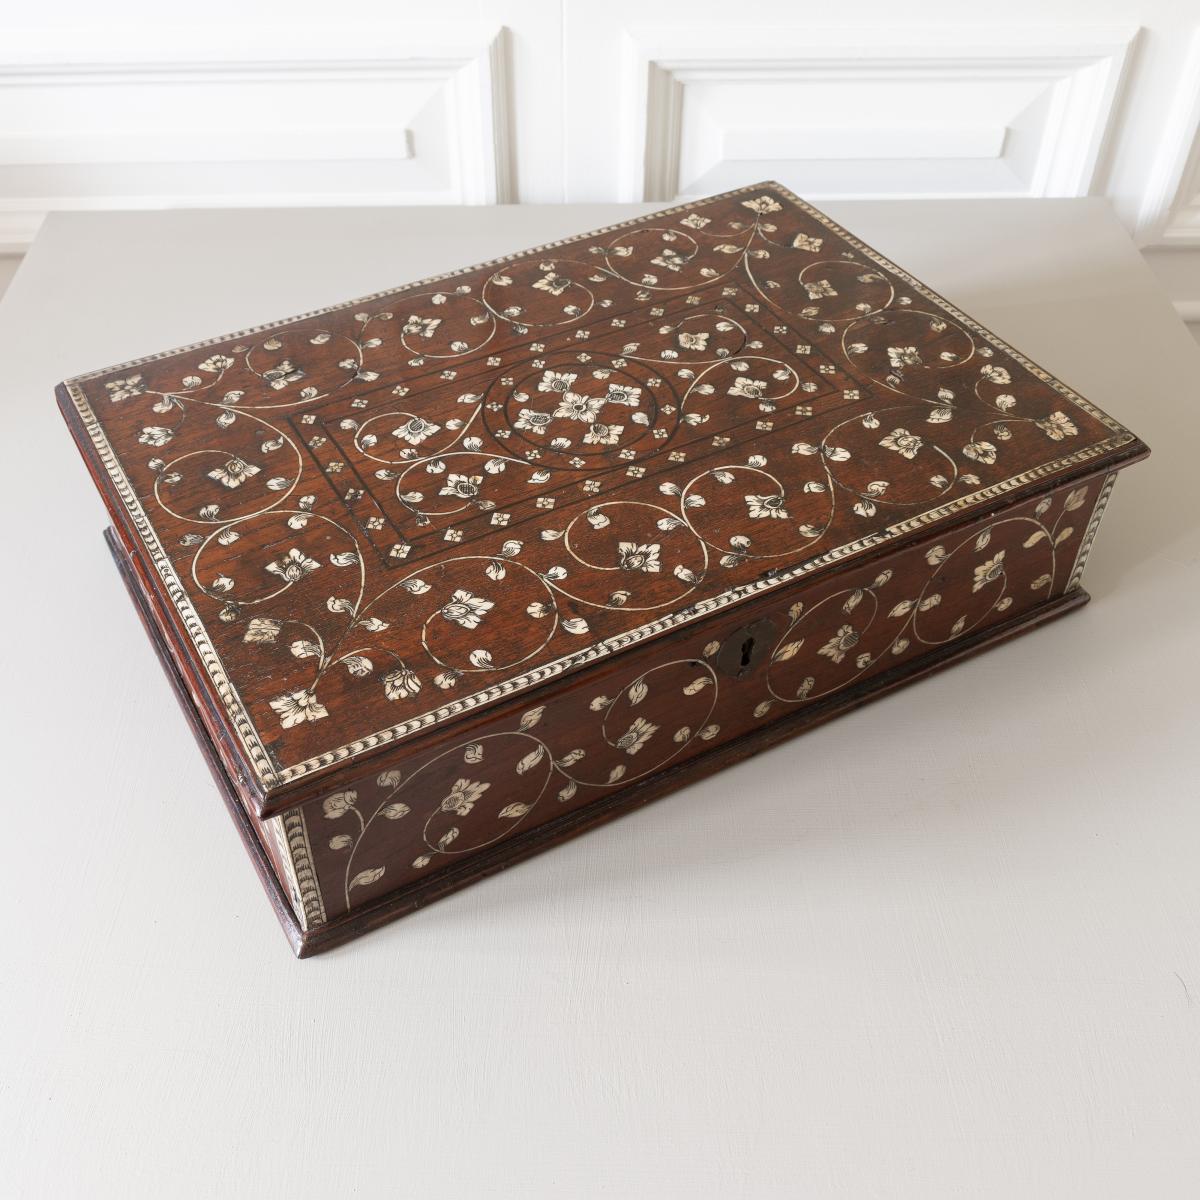 An 18th century padouk, ivory-inlaid and ebony strung document box, Vizagapatam, Eastern India, circa 1740-1780